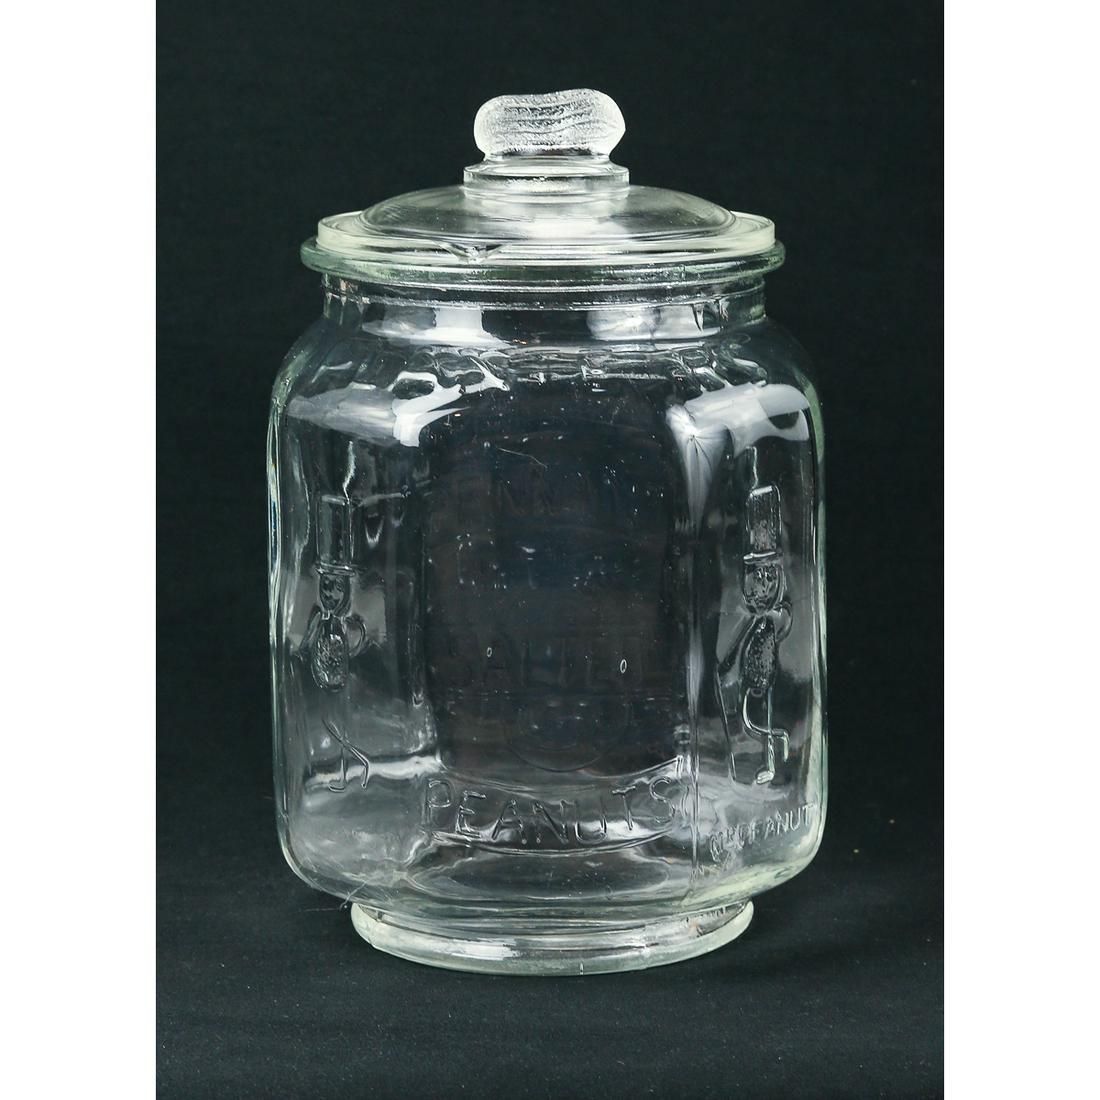 Vintage Planters Salted Peanut Jar Vintage Planters gesalzene Erdnuss-Glas mit a&hellip;